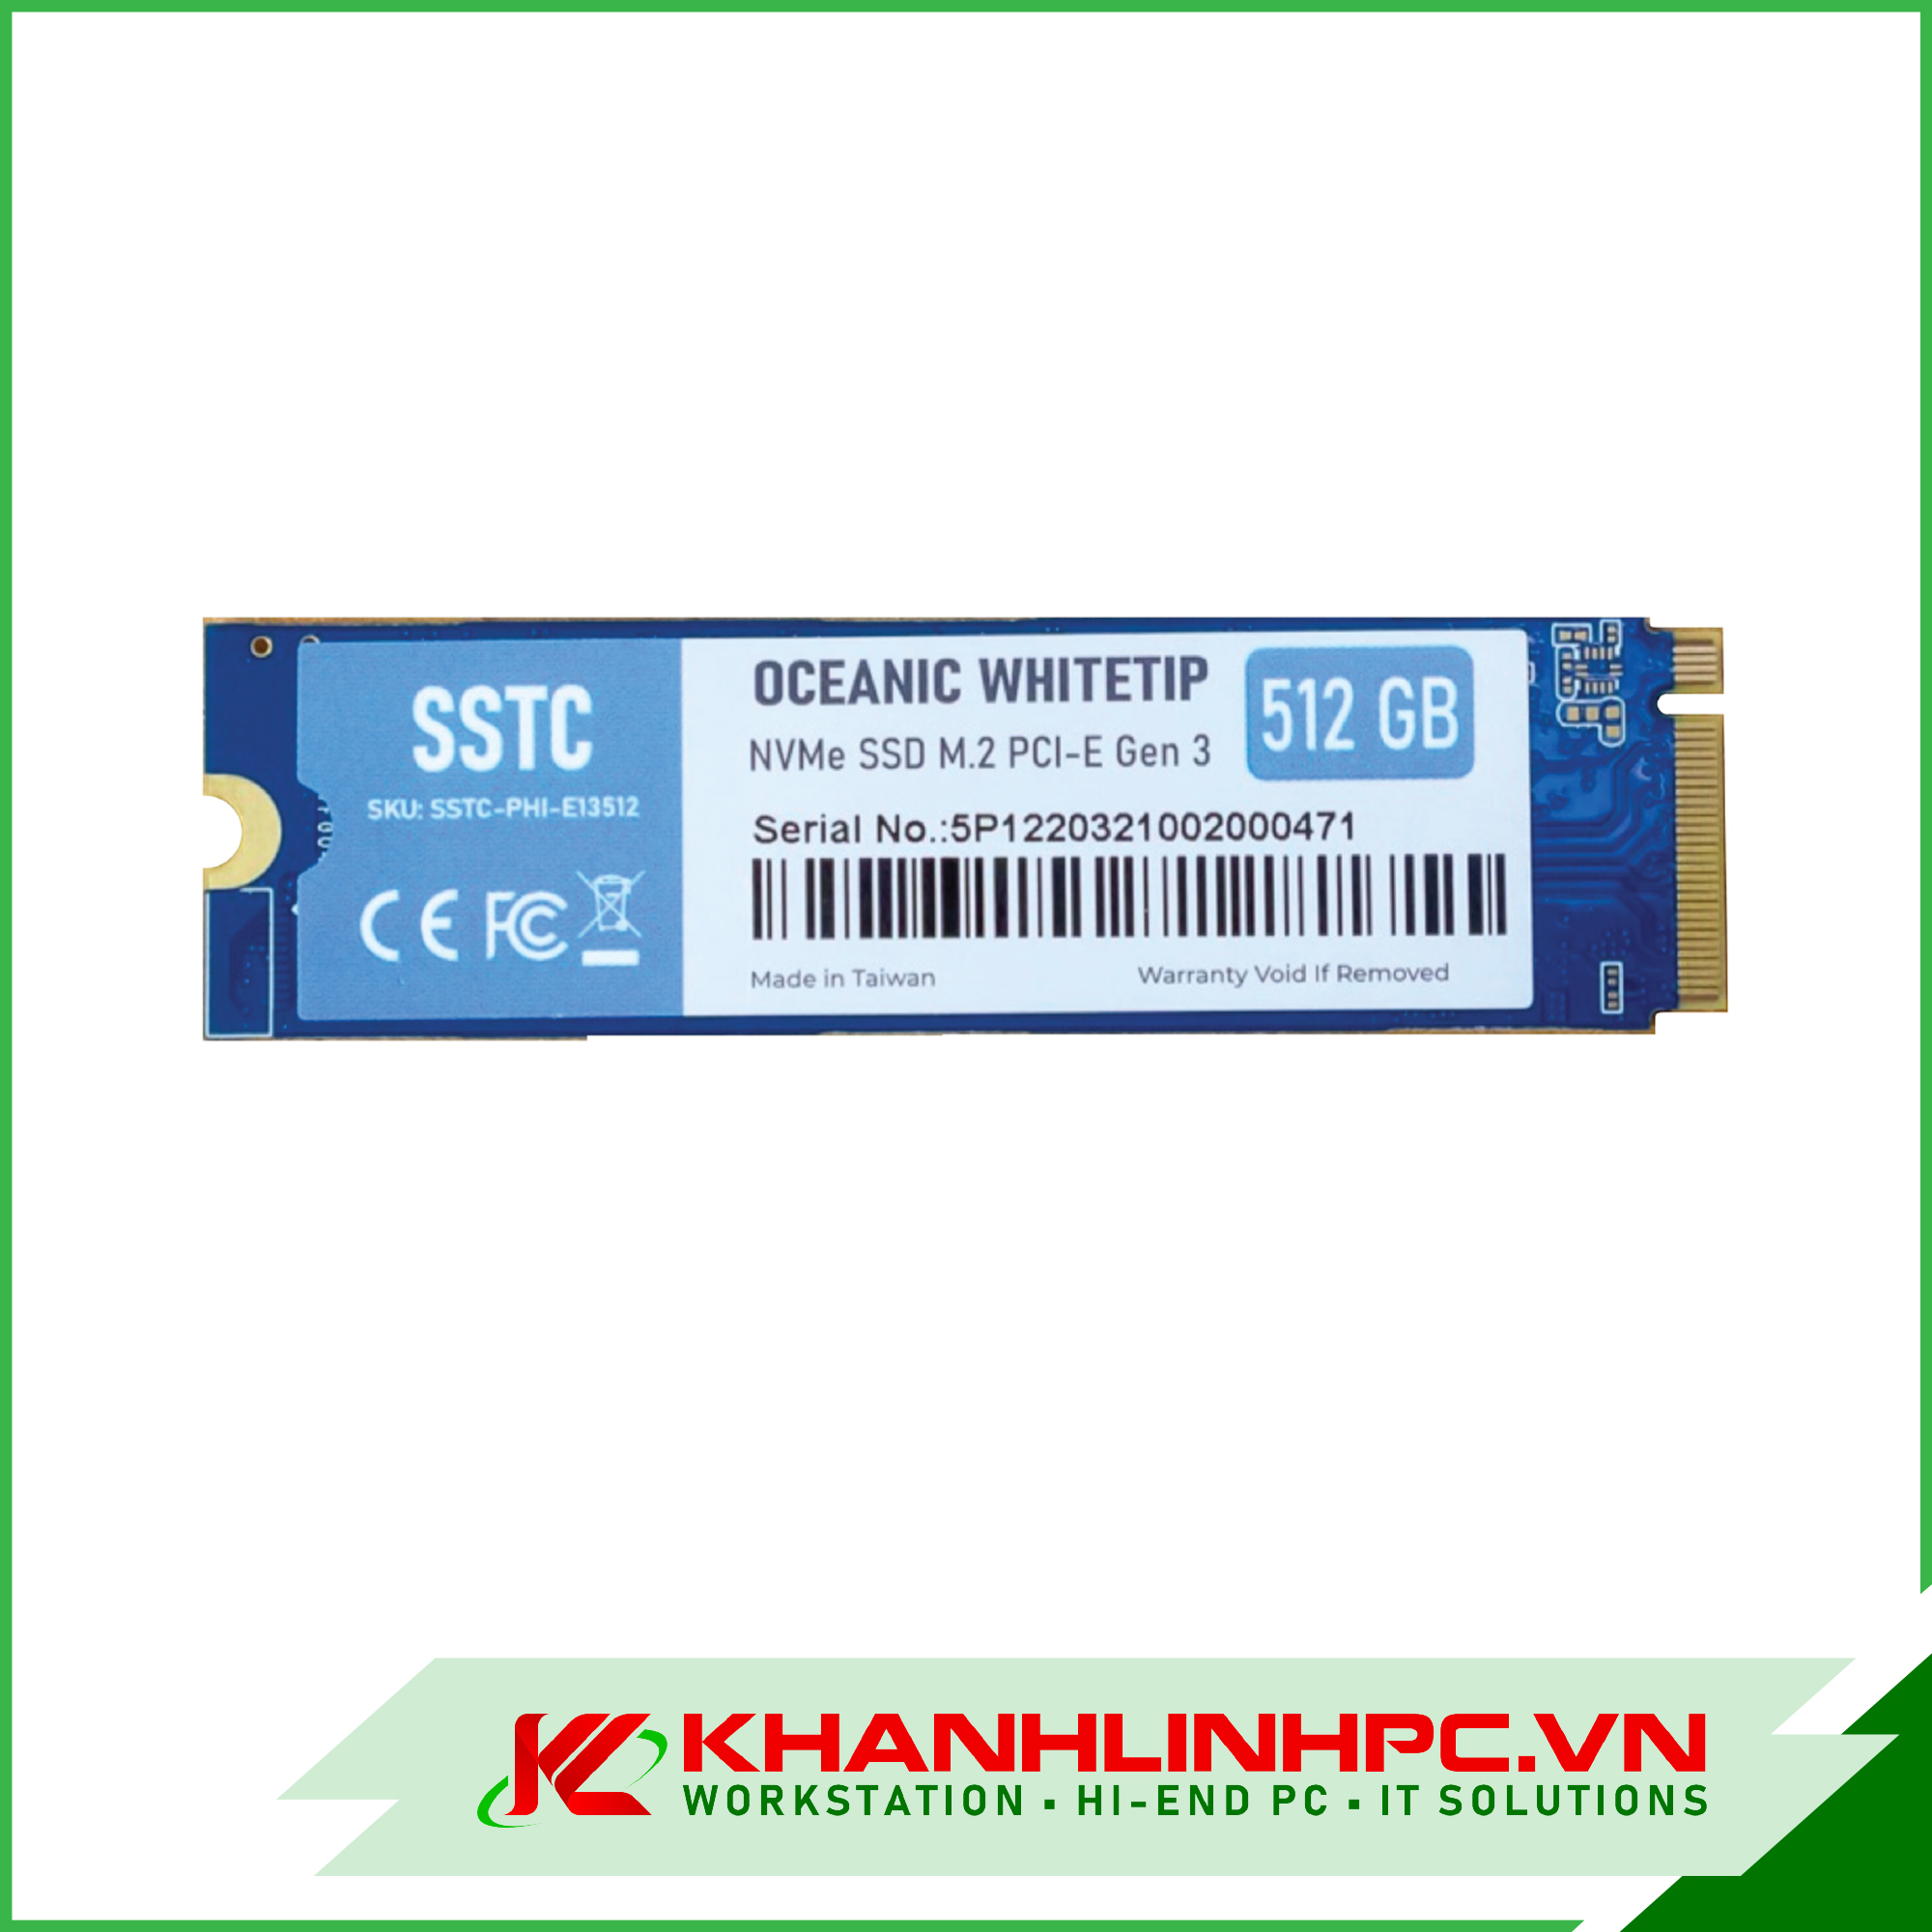 SSD 512G SSTC OCEANIC Whitetip M.2 NVMe PCIe Gen 3x4